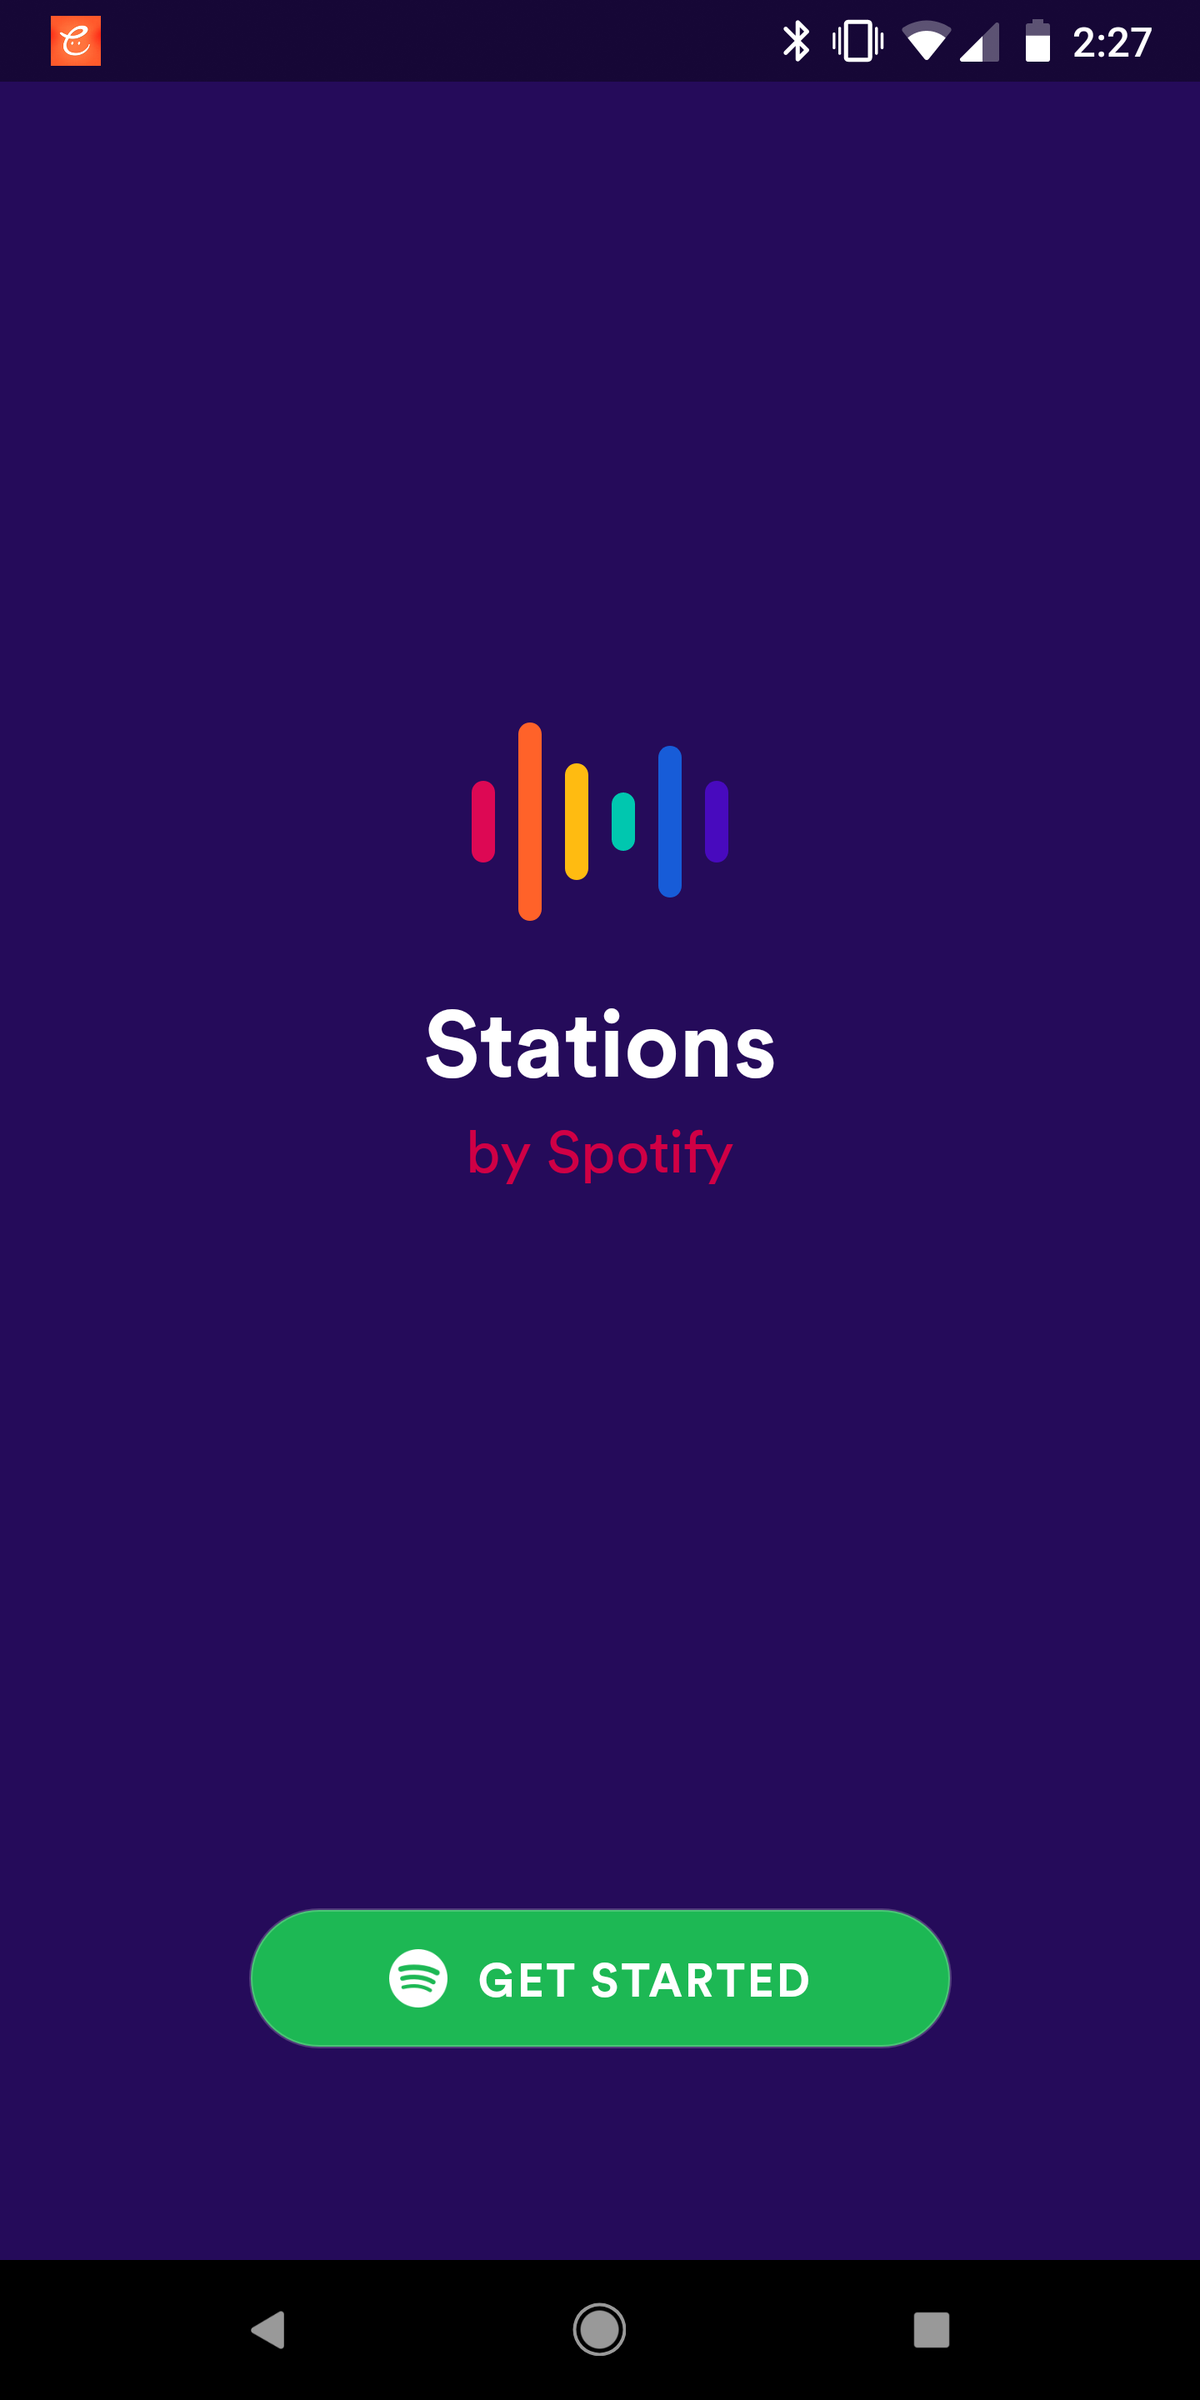 Spotify stations app